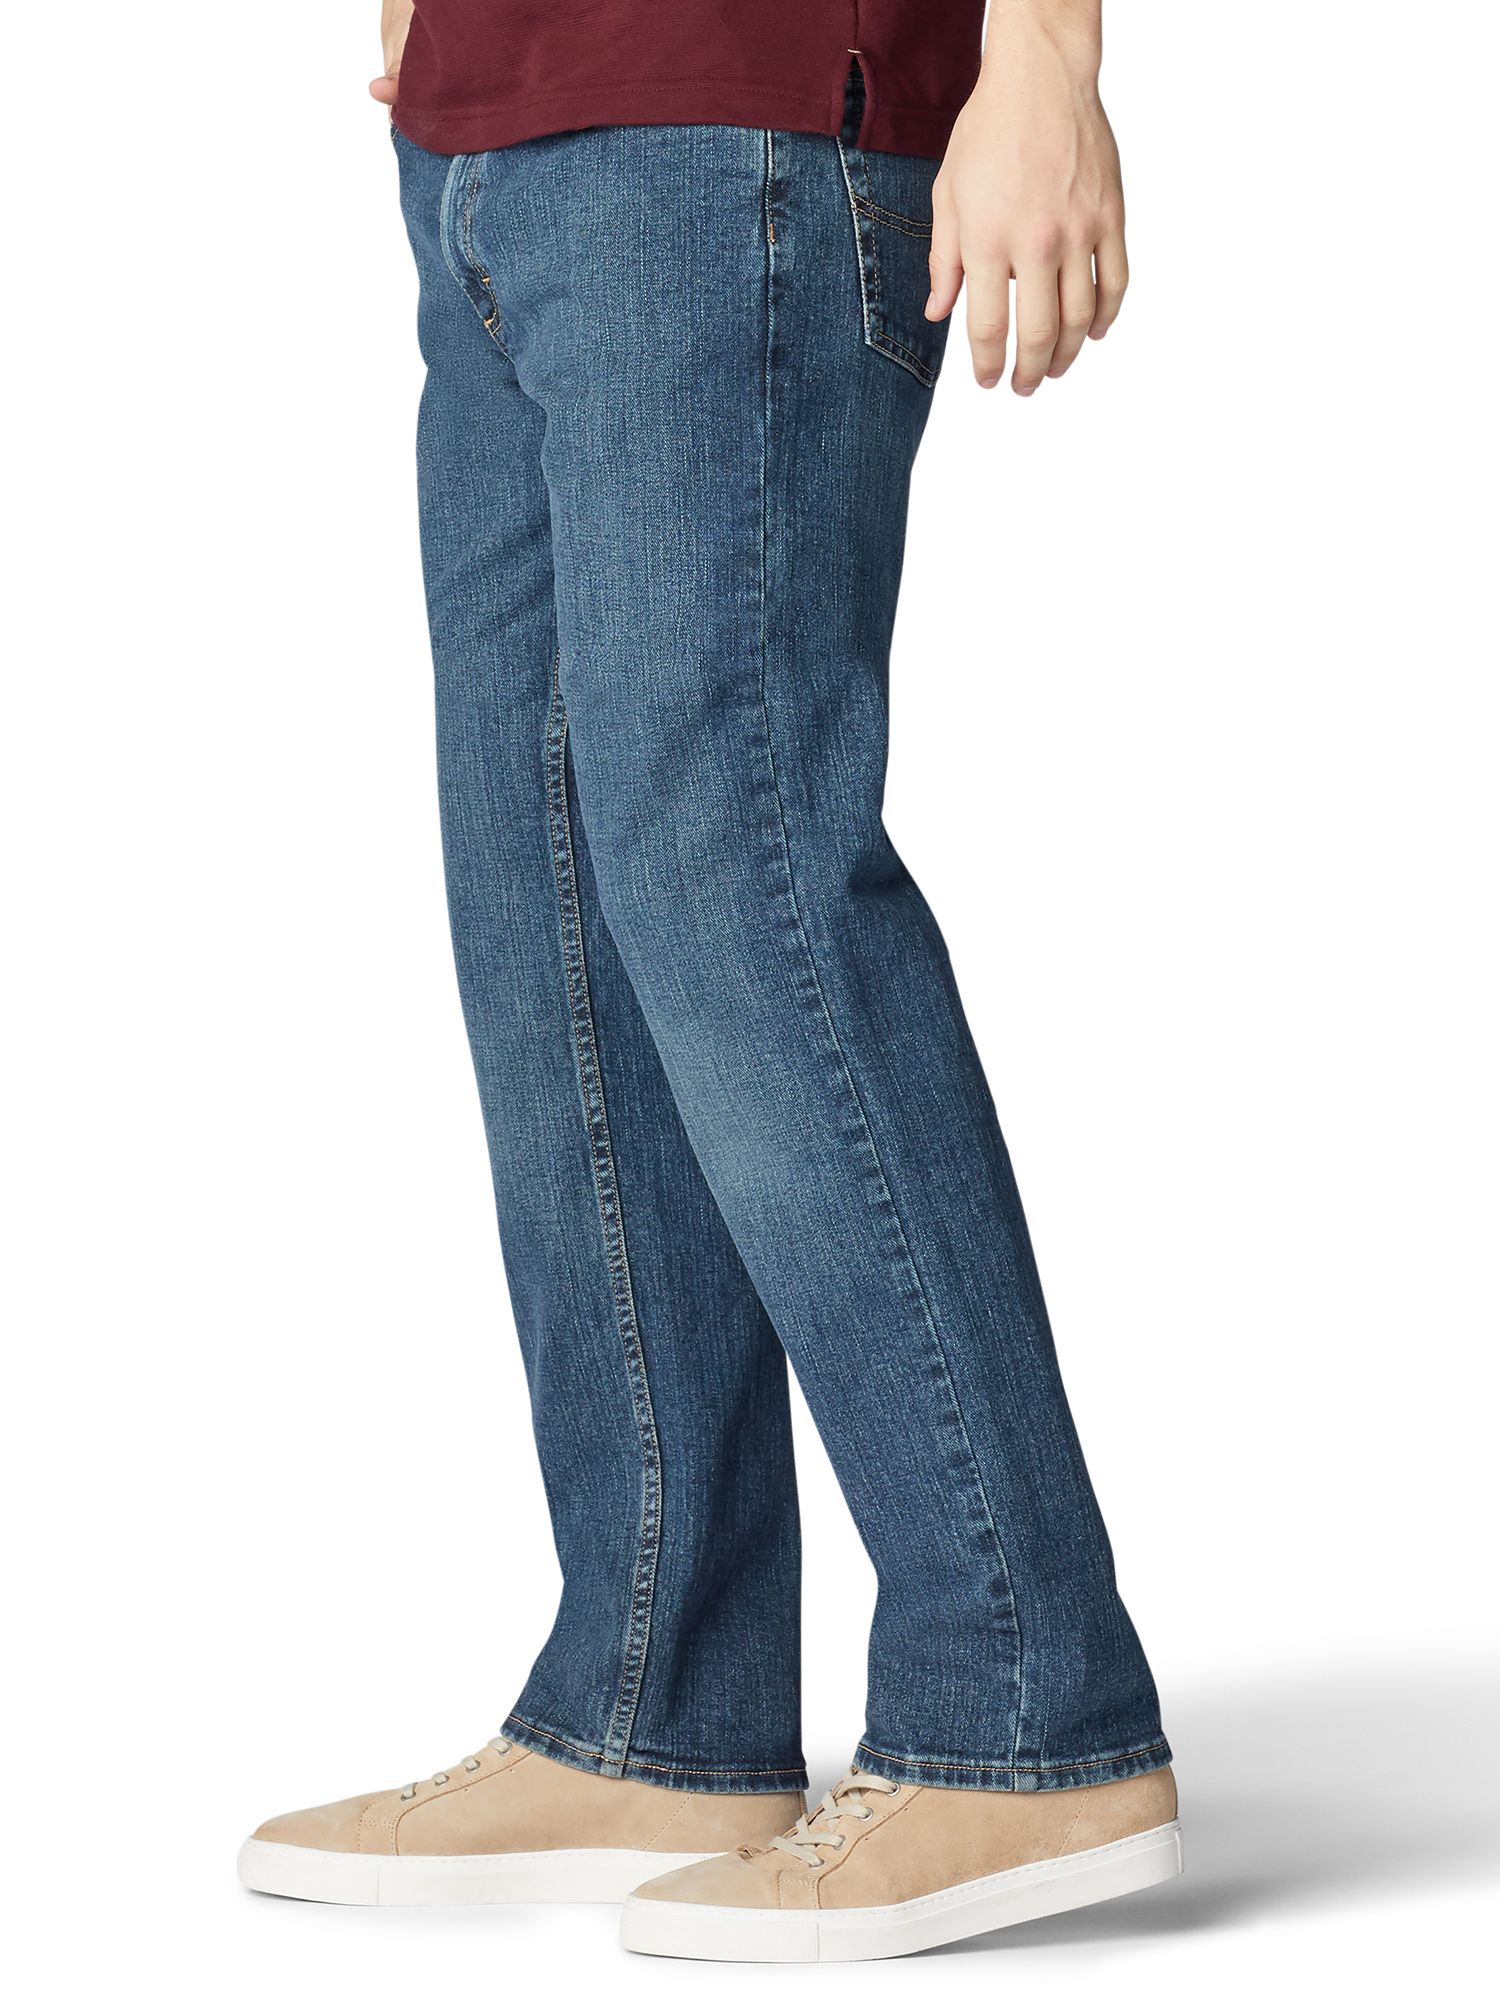 Lee Men's Regular Fit Straight Leg Stretch Jeans - image 3 of 3